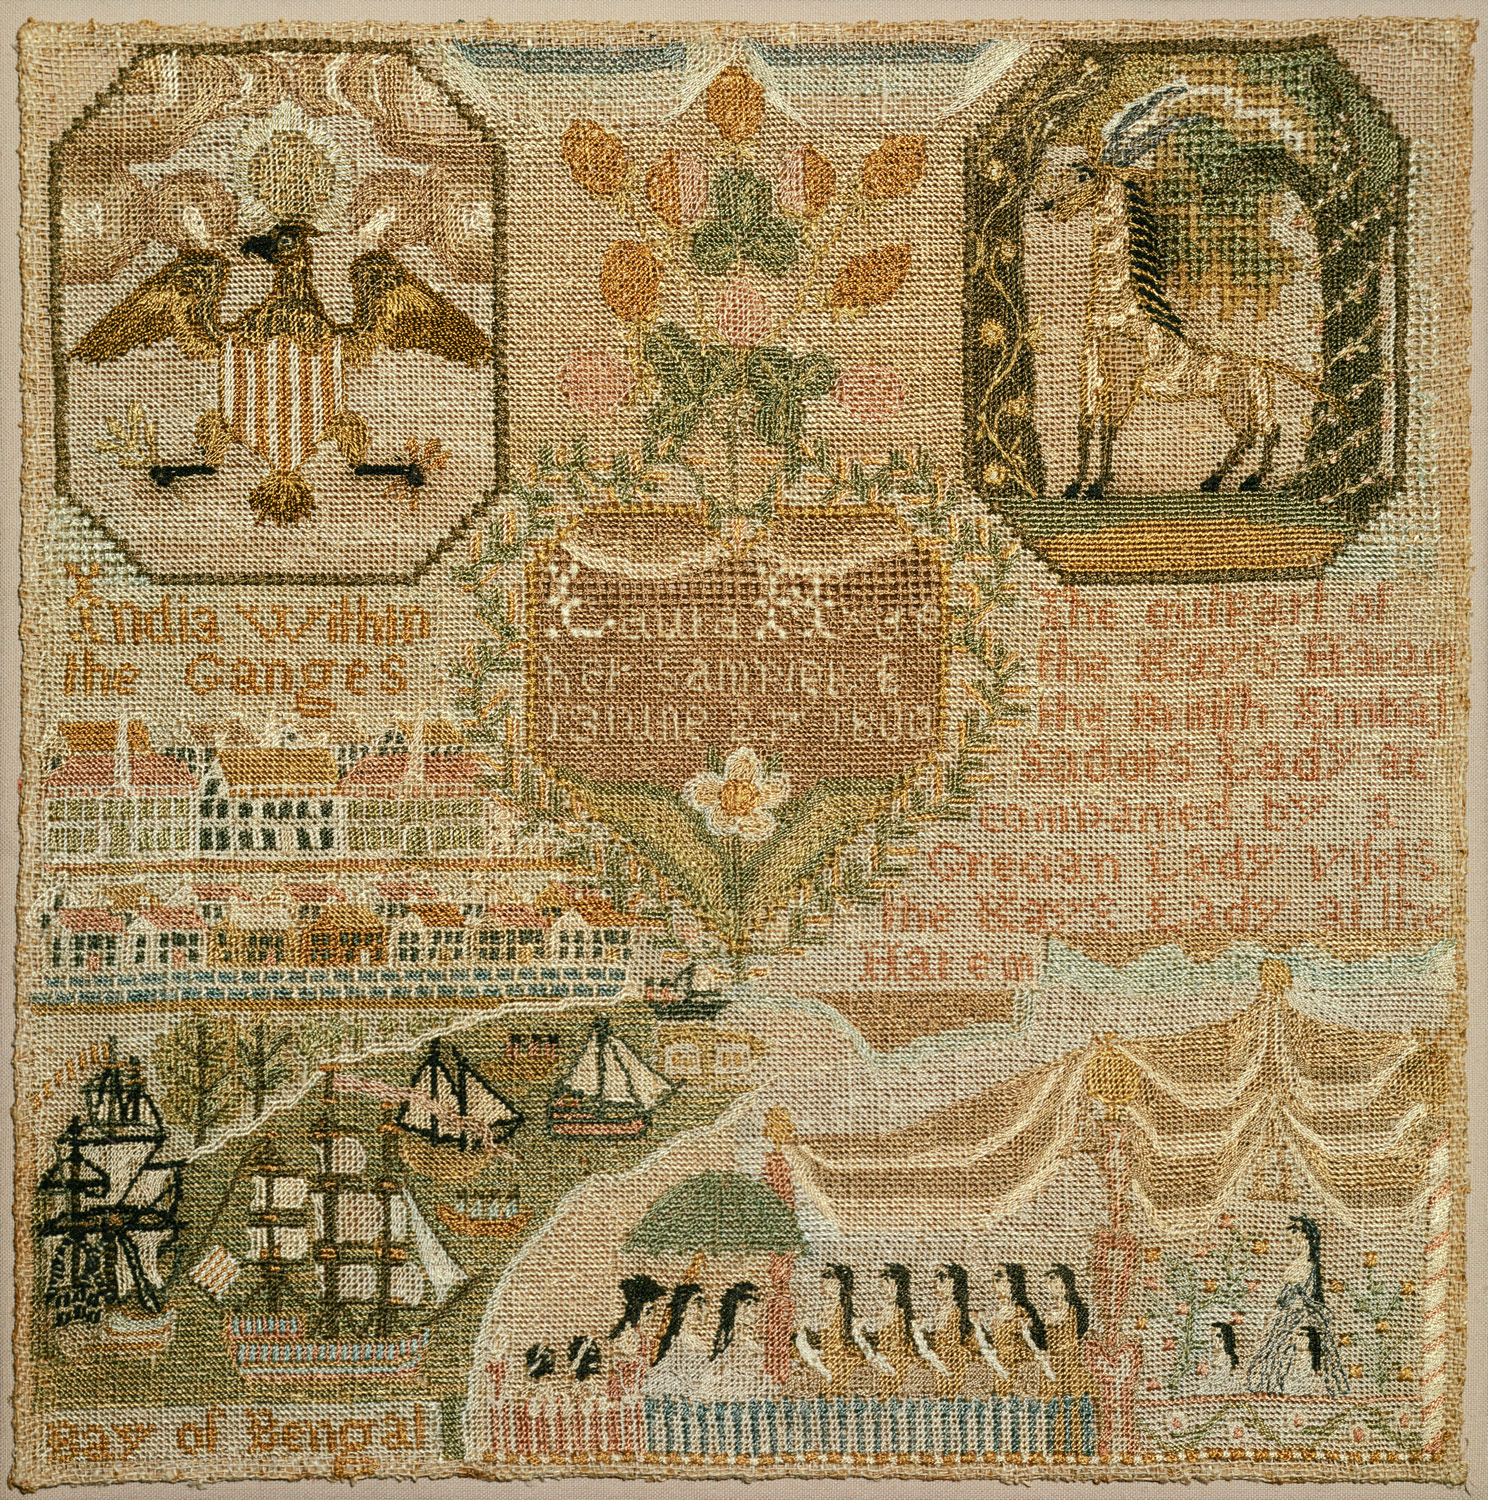 Embroidery Sampler Patterns American Needlework In The Eighteenth Century Essay Heilbrunn